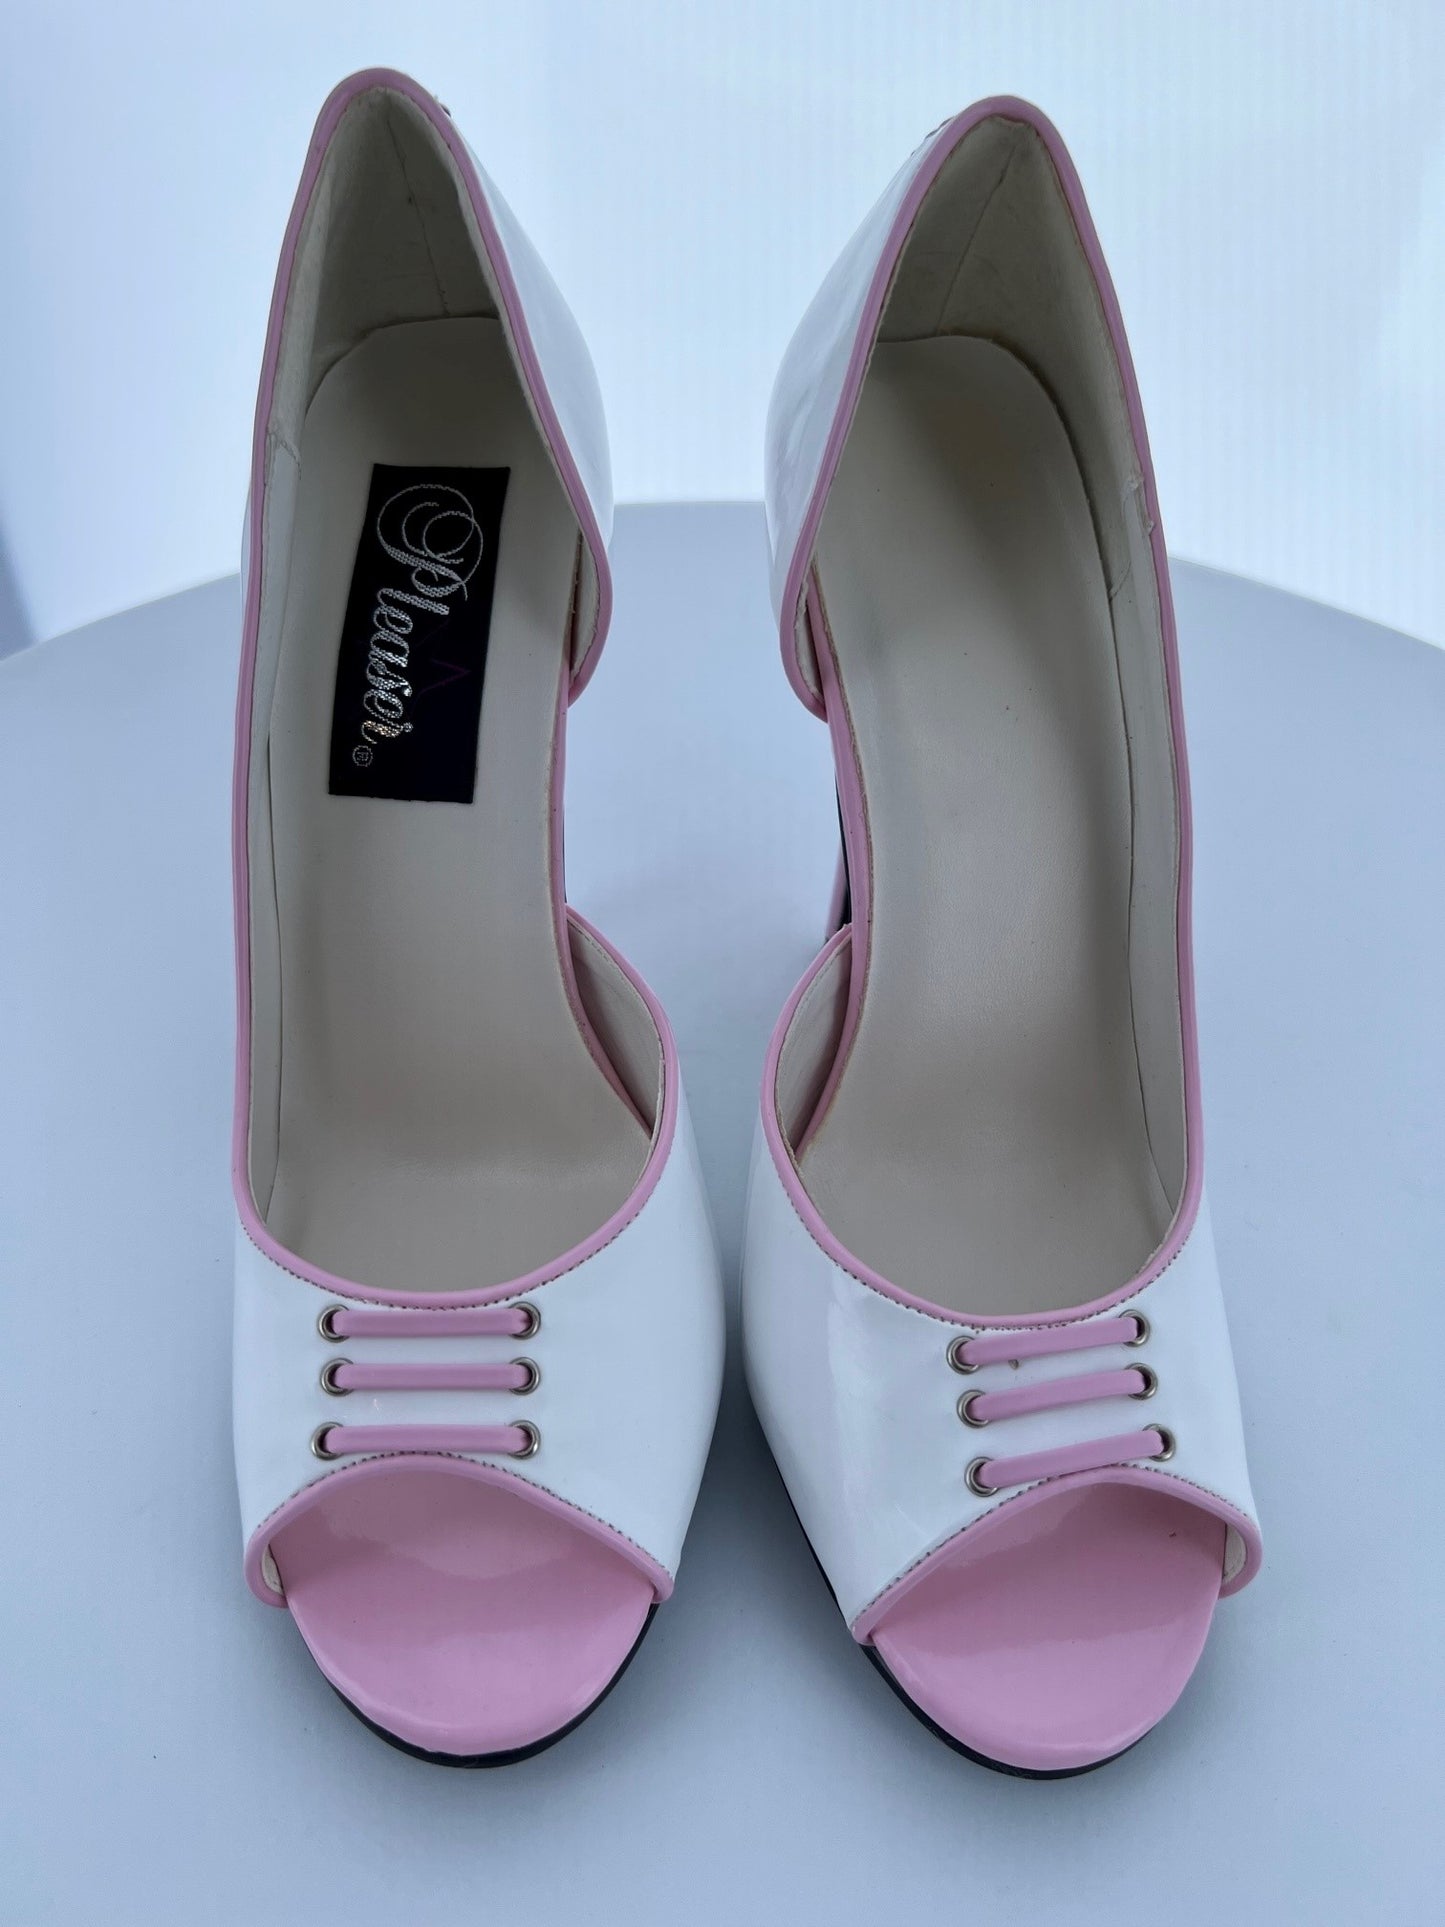 SEDUCE-220 Pleaser Wht/B.Pink Patent High Heel Alternative Footwear Discontinued Sale Stock